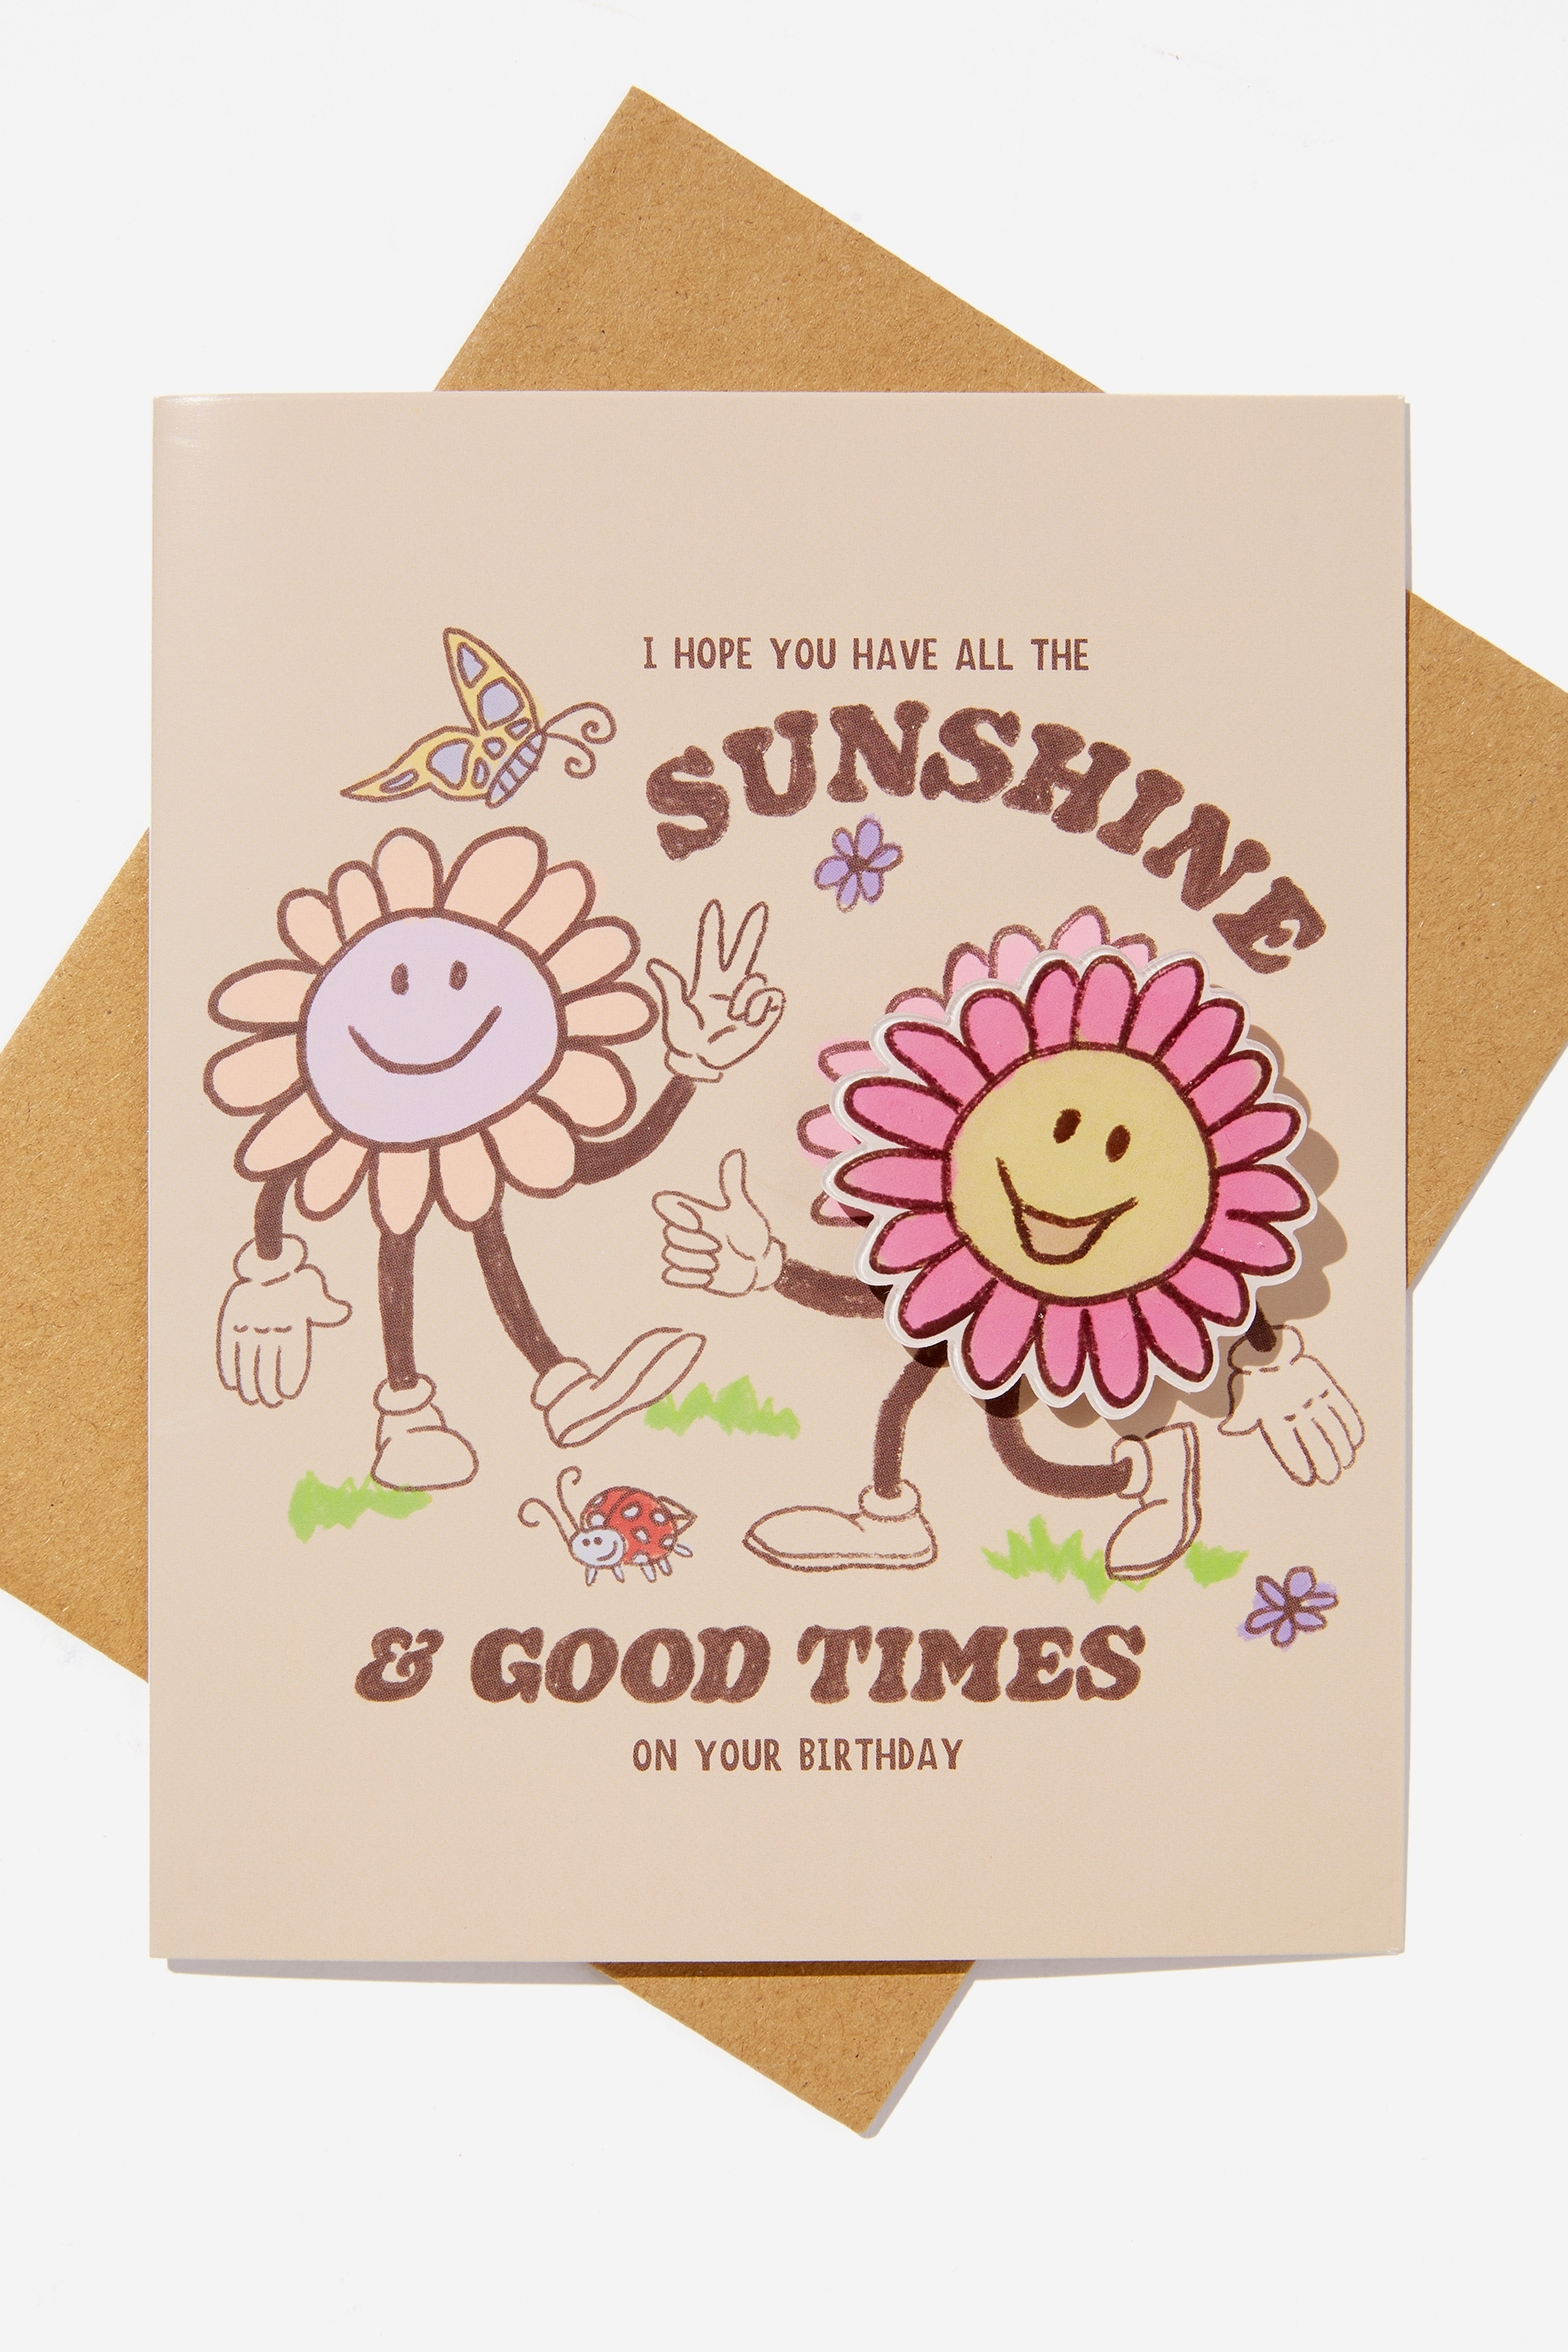 Typo - Premium Badge Card - Sunshine & good times